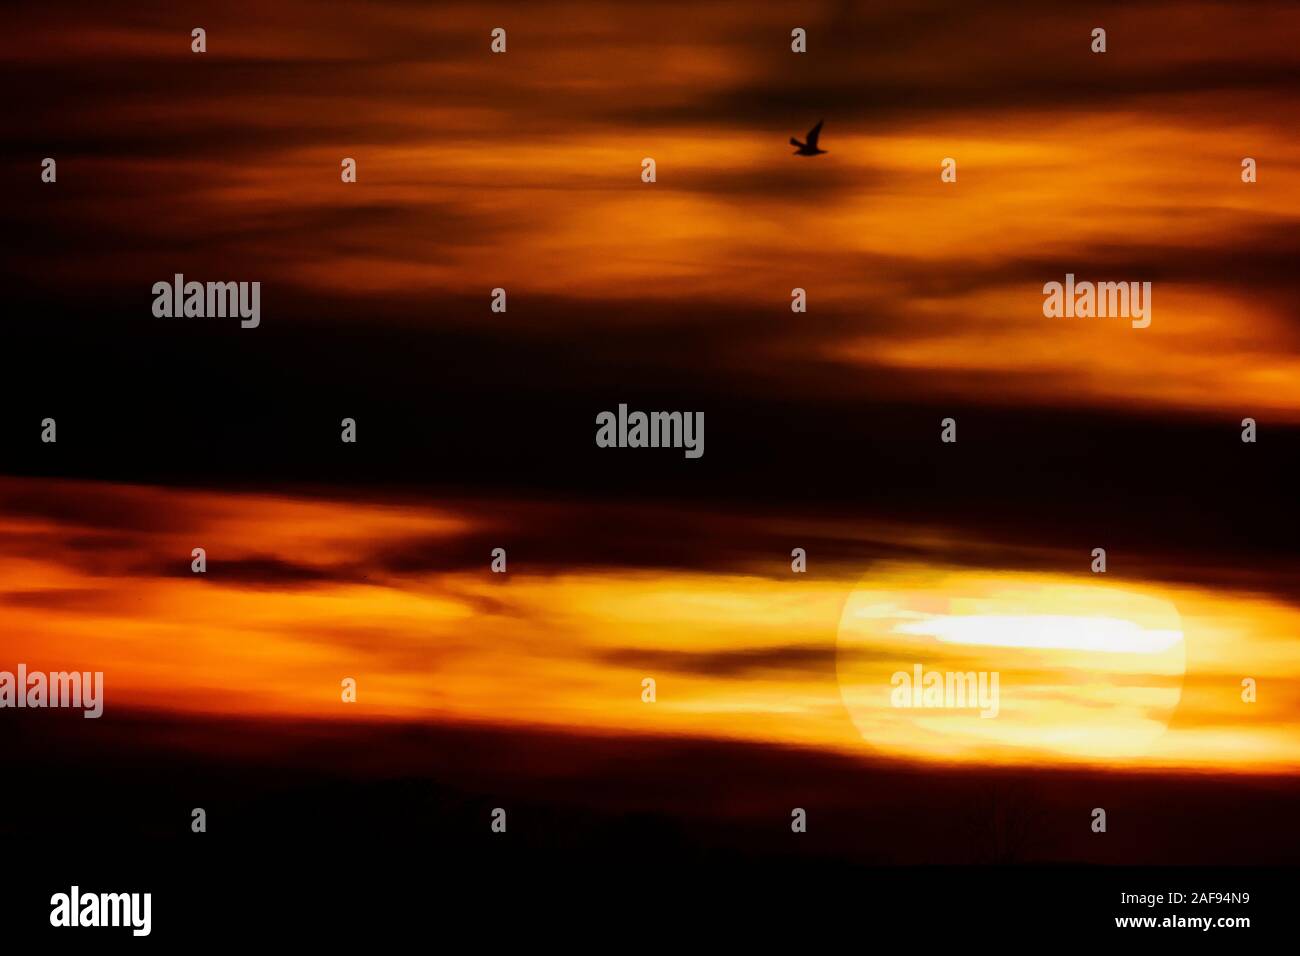 Gull flight in dramatic sunset scenic Stock Photo